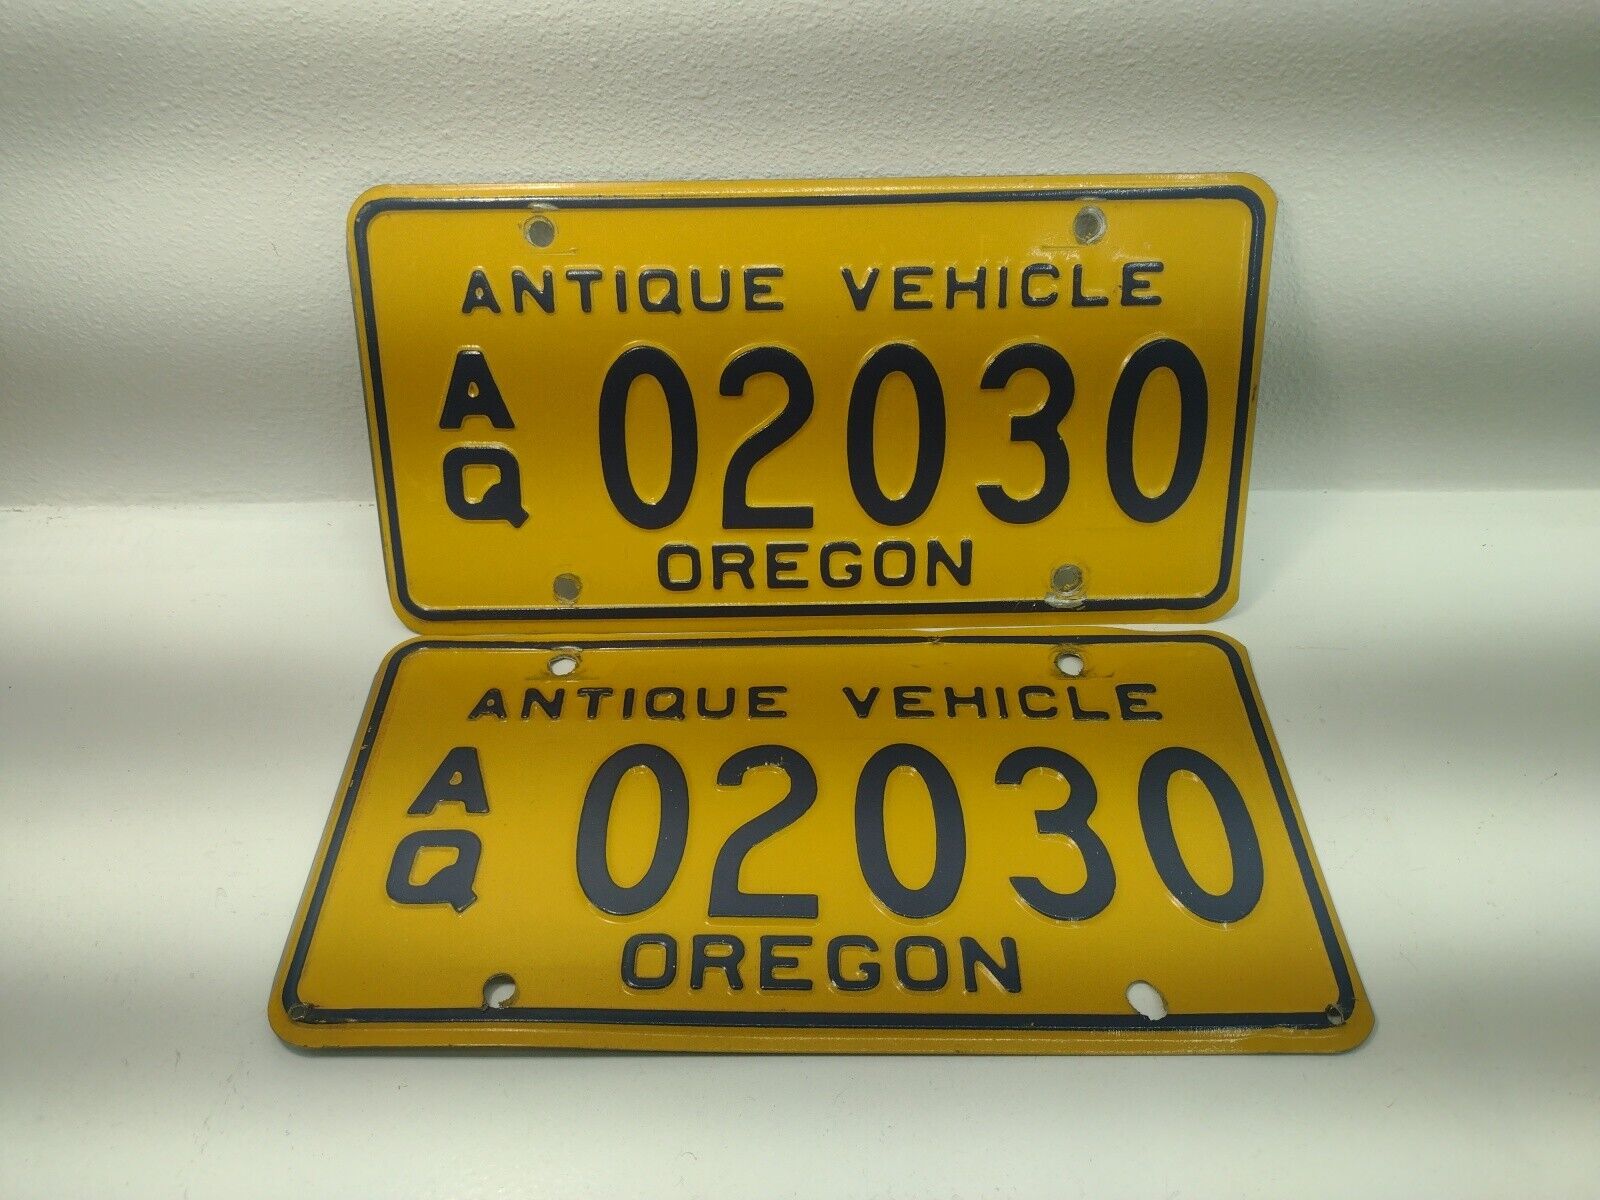 Vintage Oregon PAIR Set of License Plates - Antique Vehicle - AQ 02030 - Nice